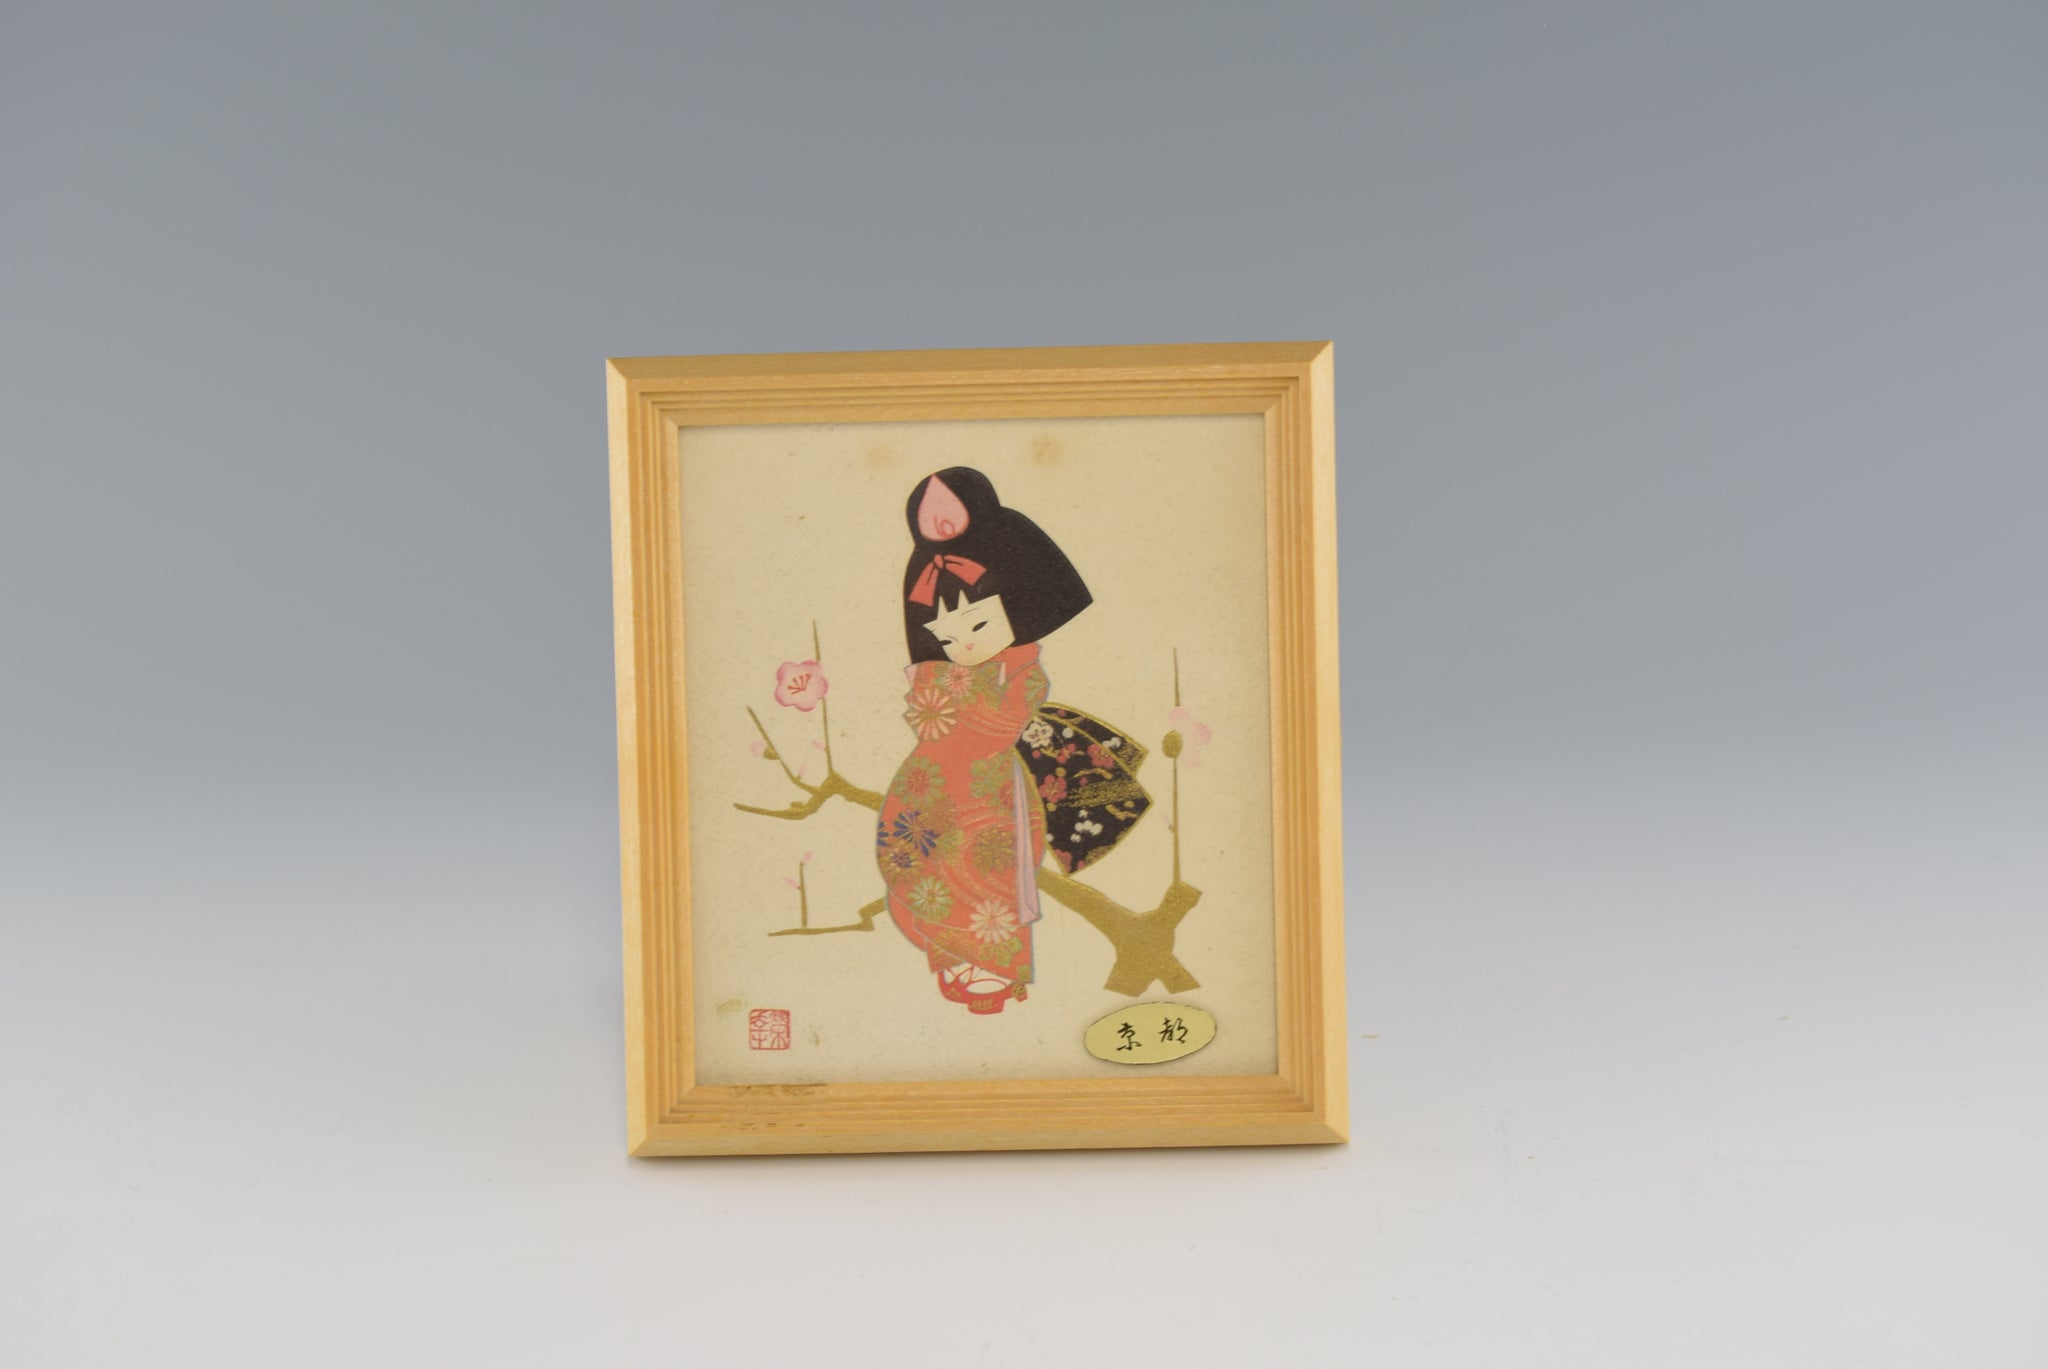 Japanese Kyoto Girl Vintage Ornament Charms